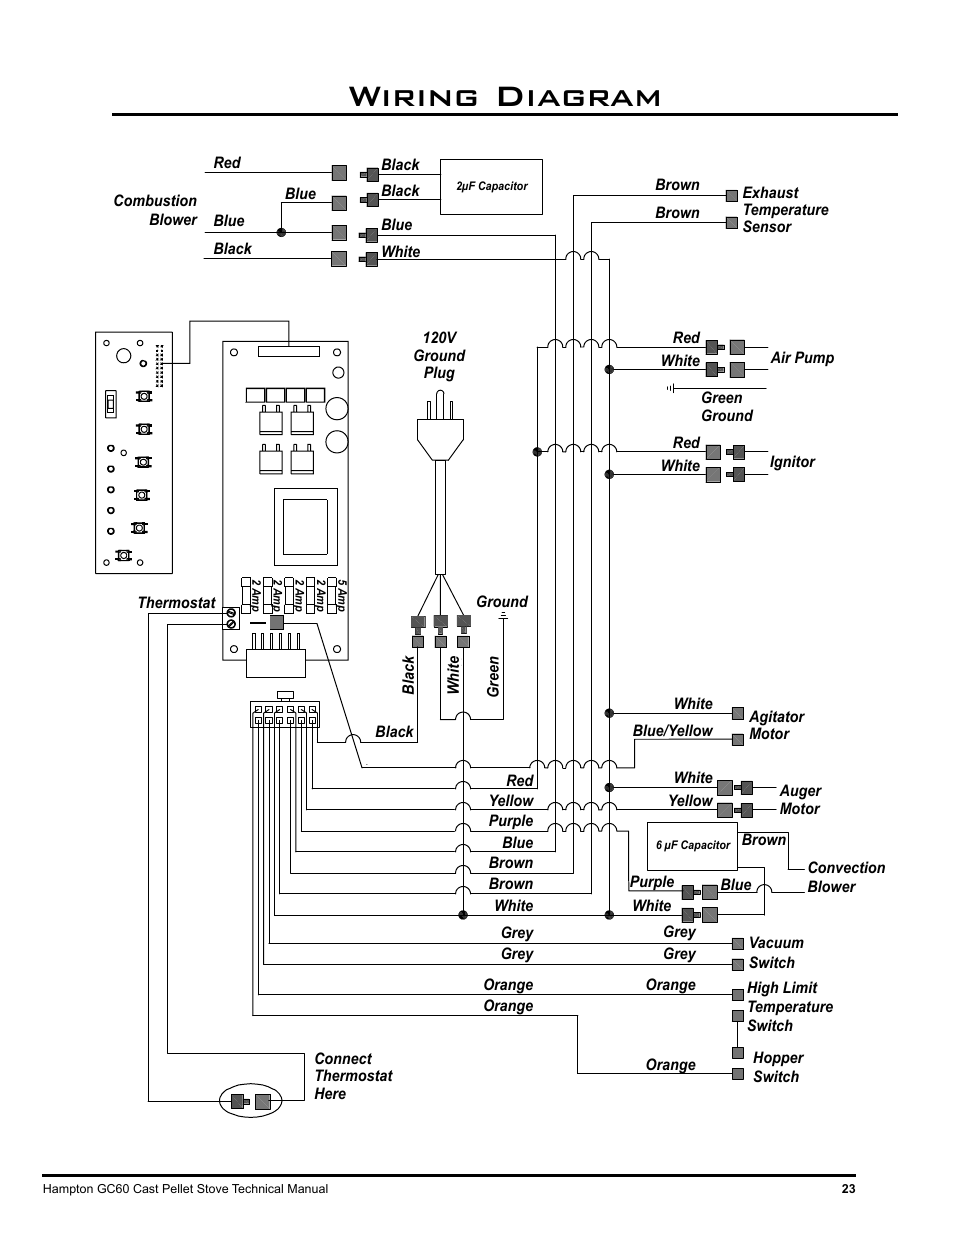 Wiring diagram | Regency Hampton GC60 Large Pellet Stove TECHNICAL